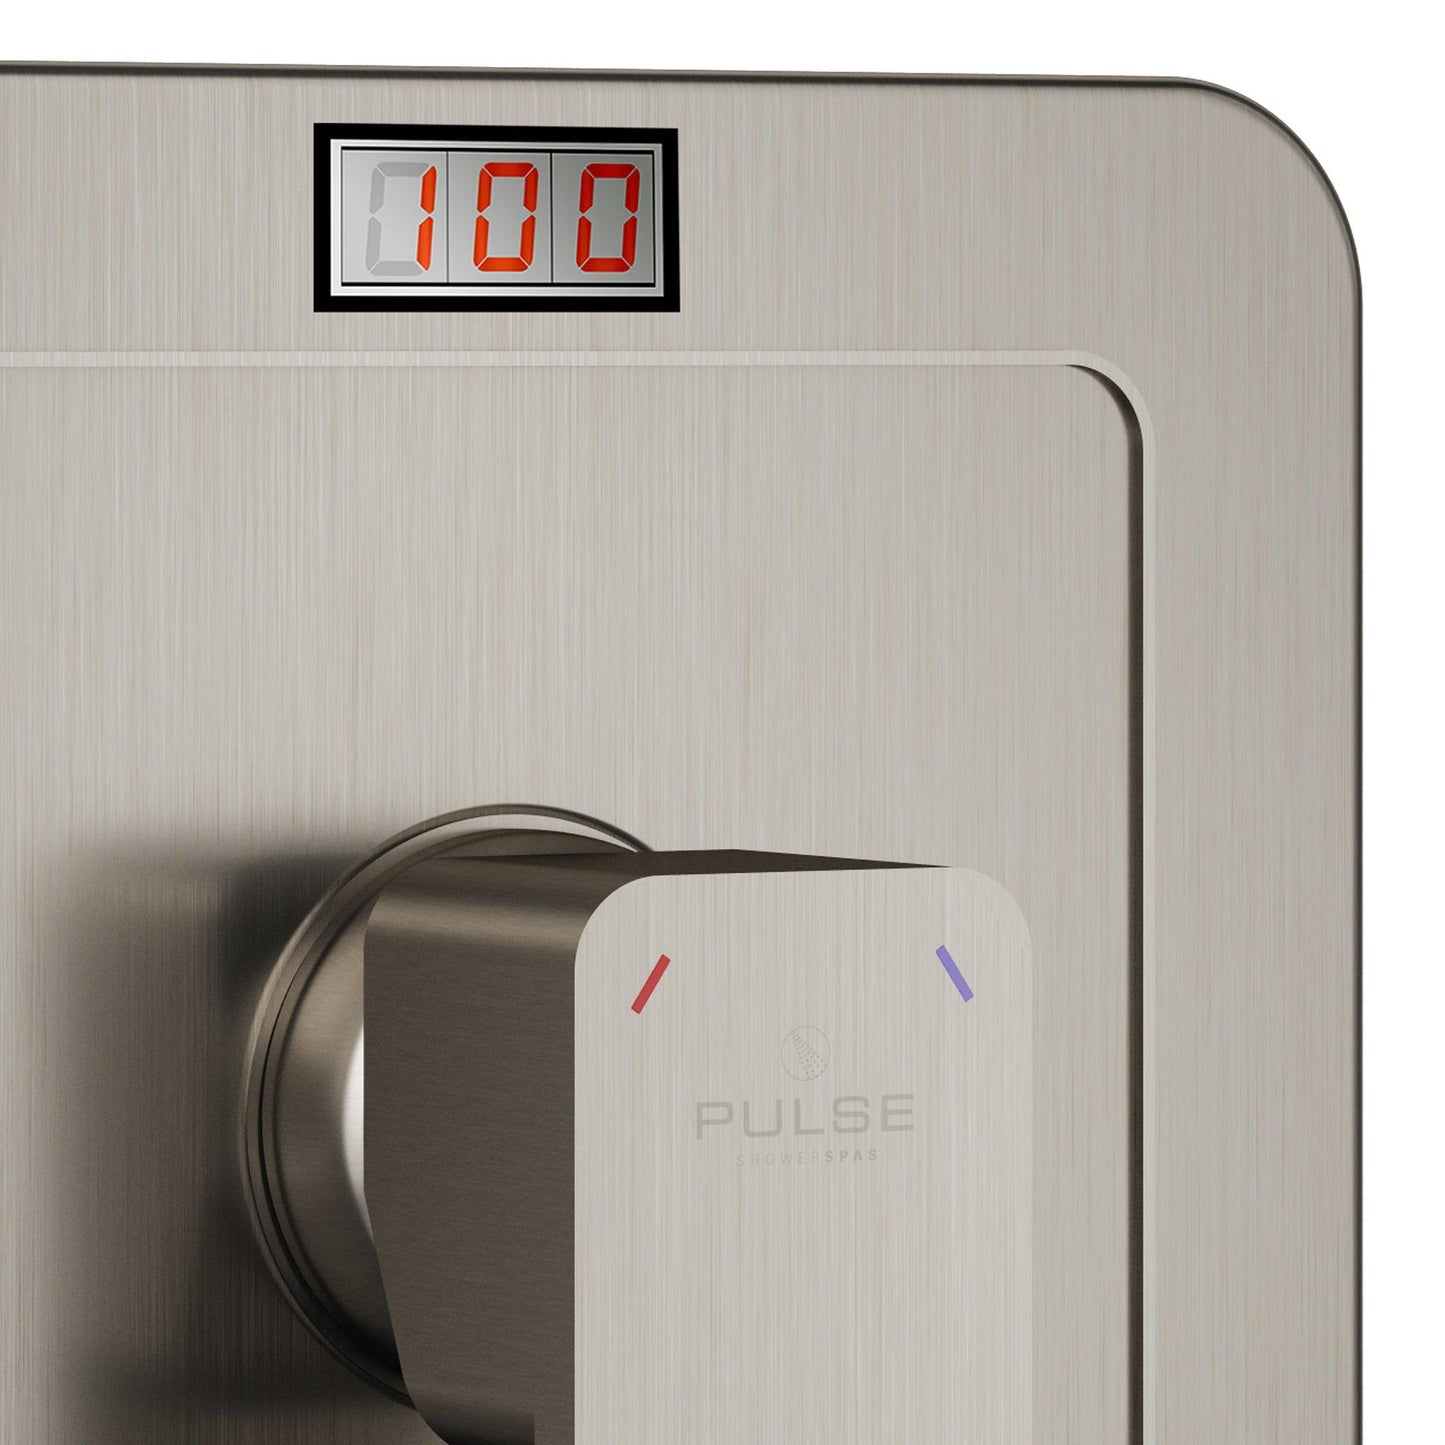 PULSE ShowerSpas Square LED Tru-Temp Pressure Balance 1/2" Rough-In Valve With Brushed Nickel Trim Kit